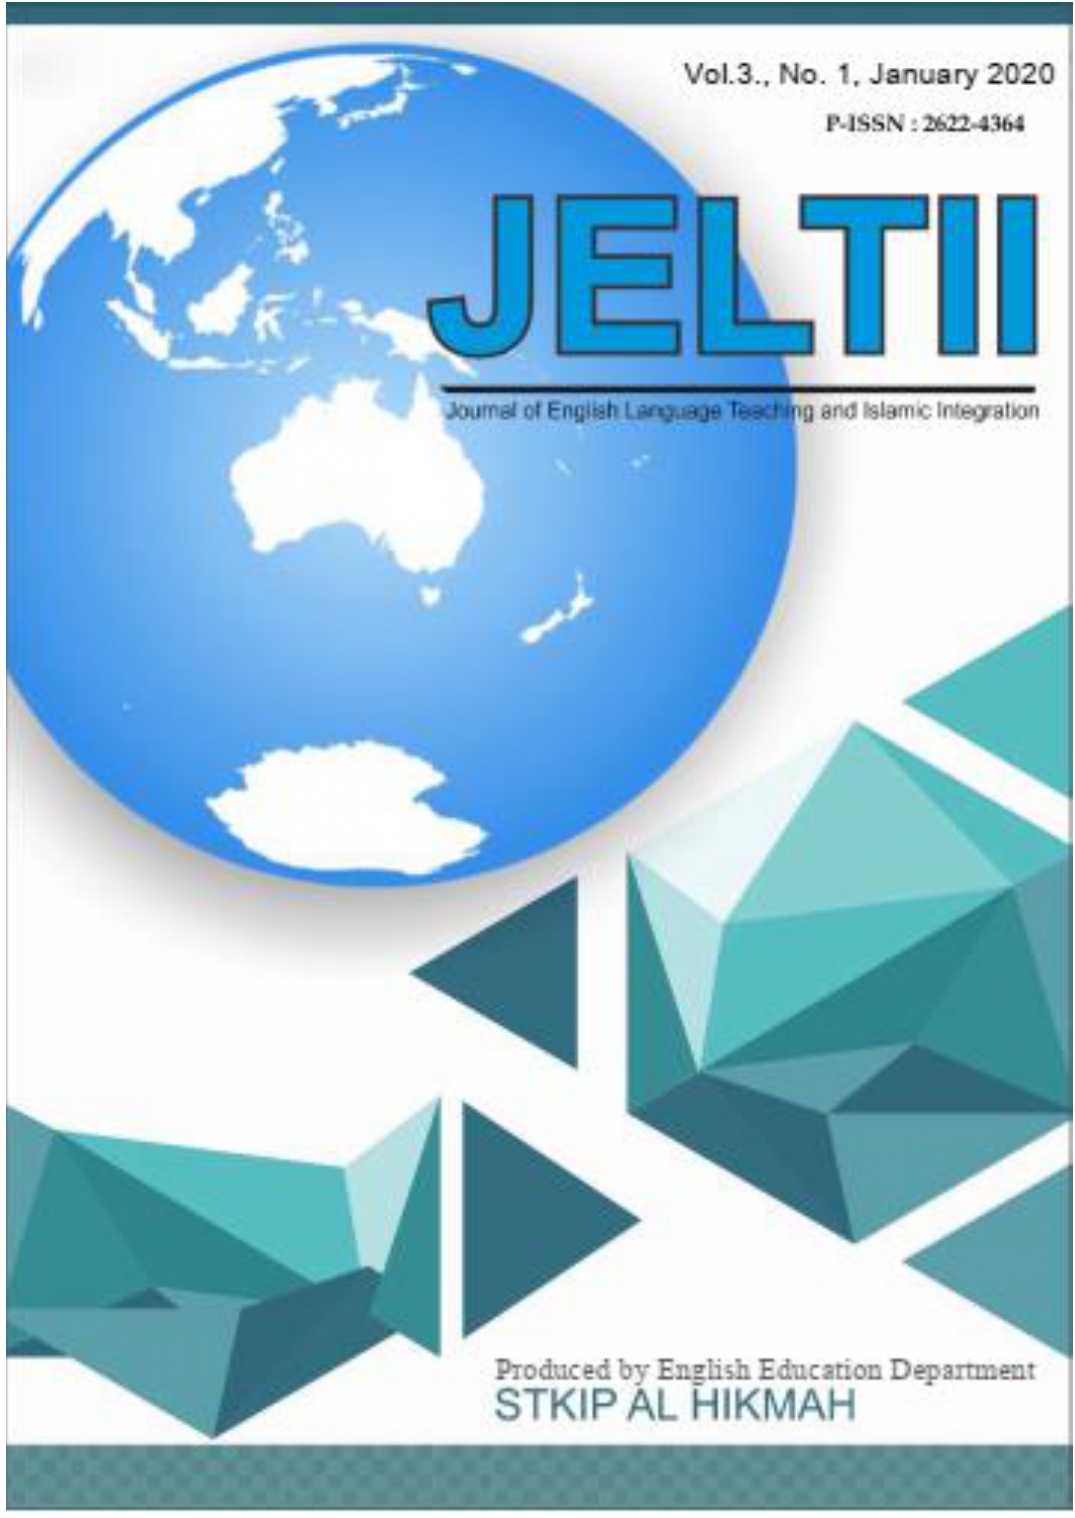 					View Vol. 3 No. 01 (2020): JELTII: Journal of English Language Teaching and Islamic Integration
				